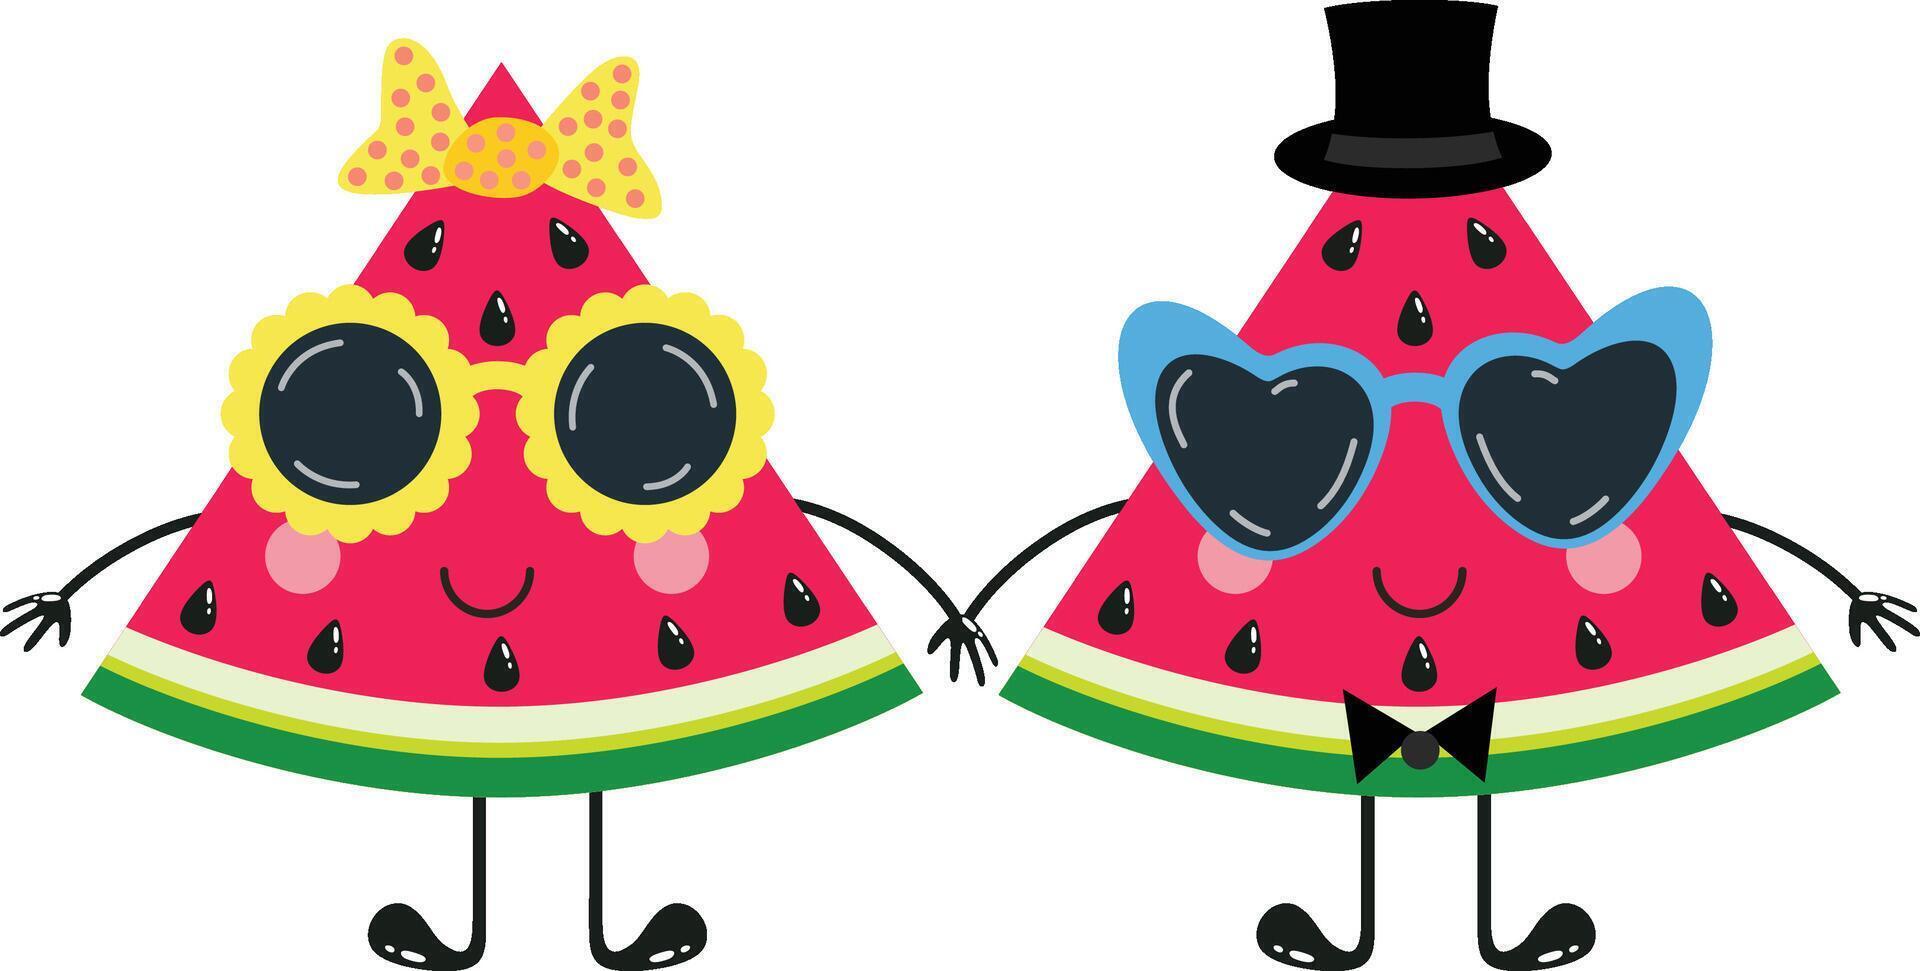 Funny watermelon slice mascot couple with sunglasses vector